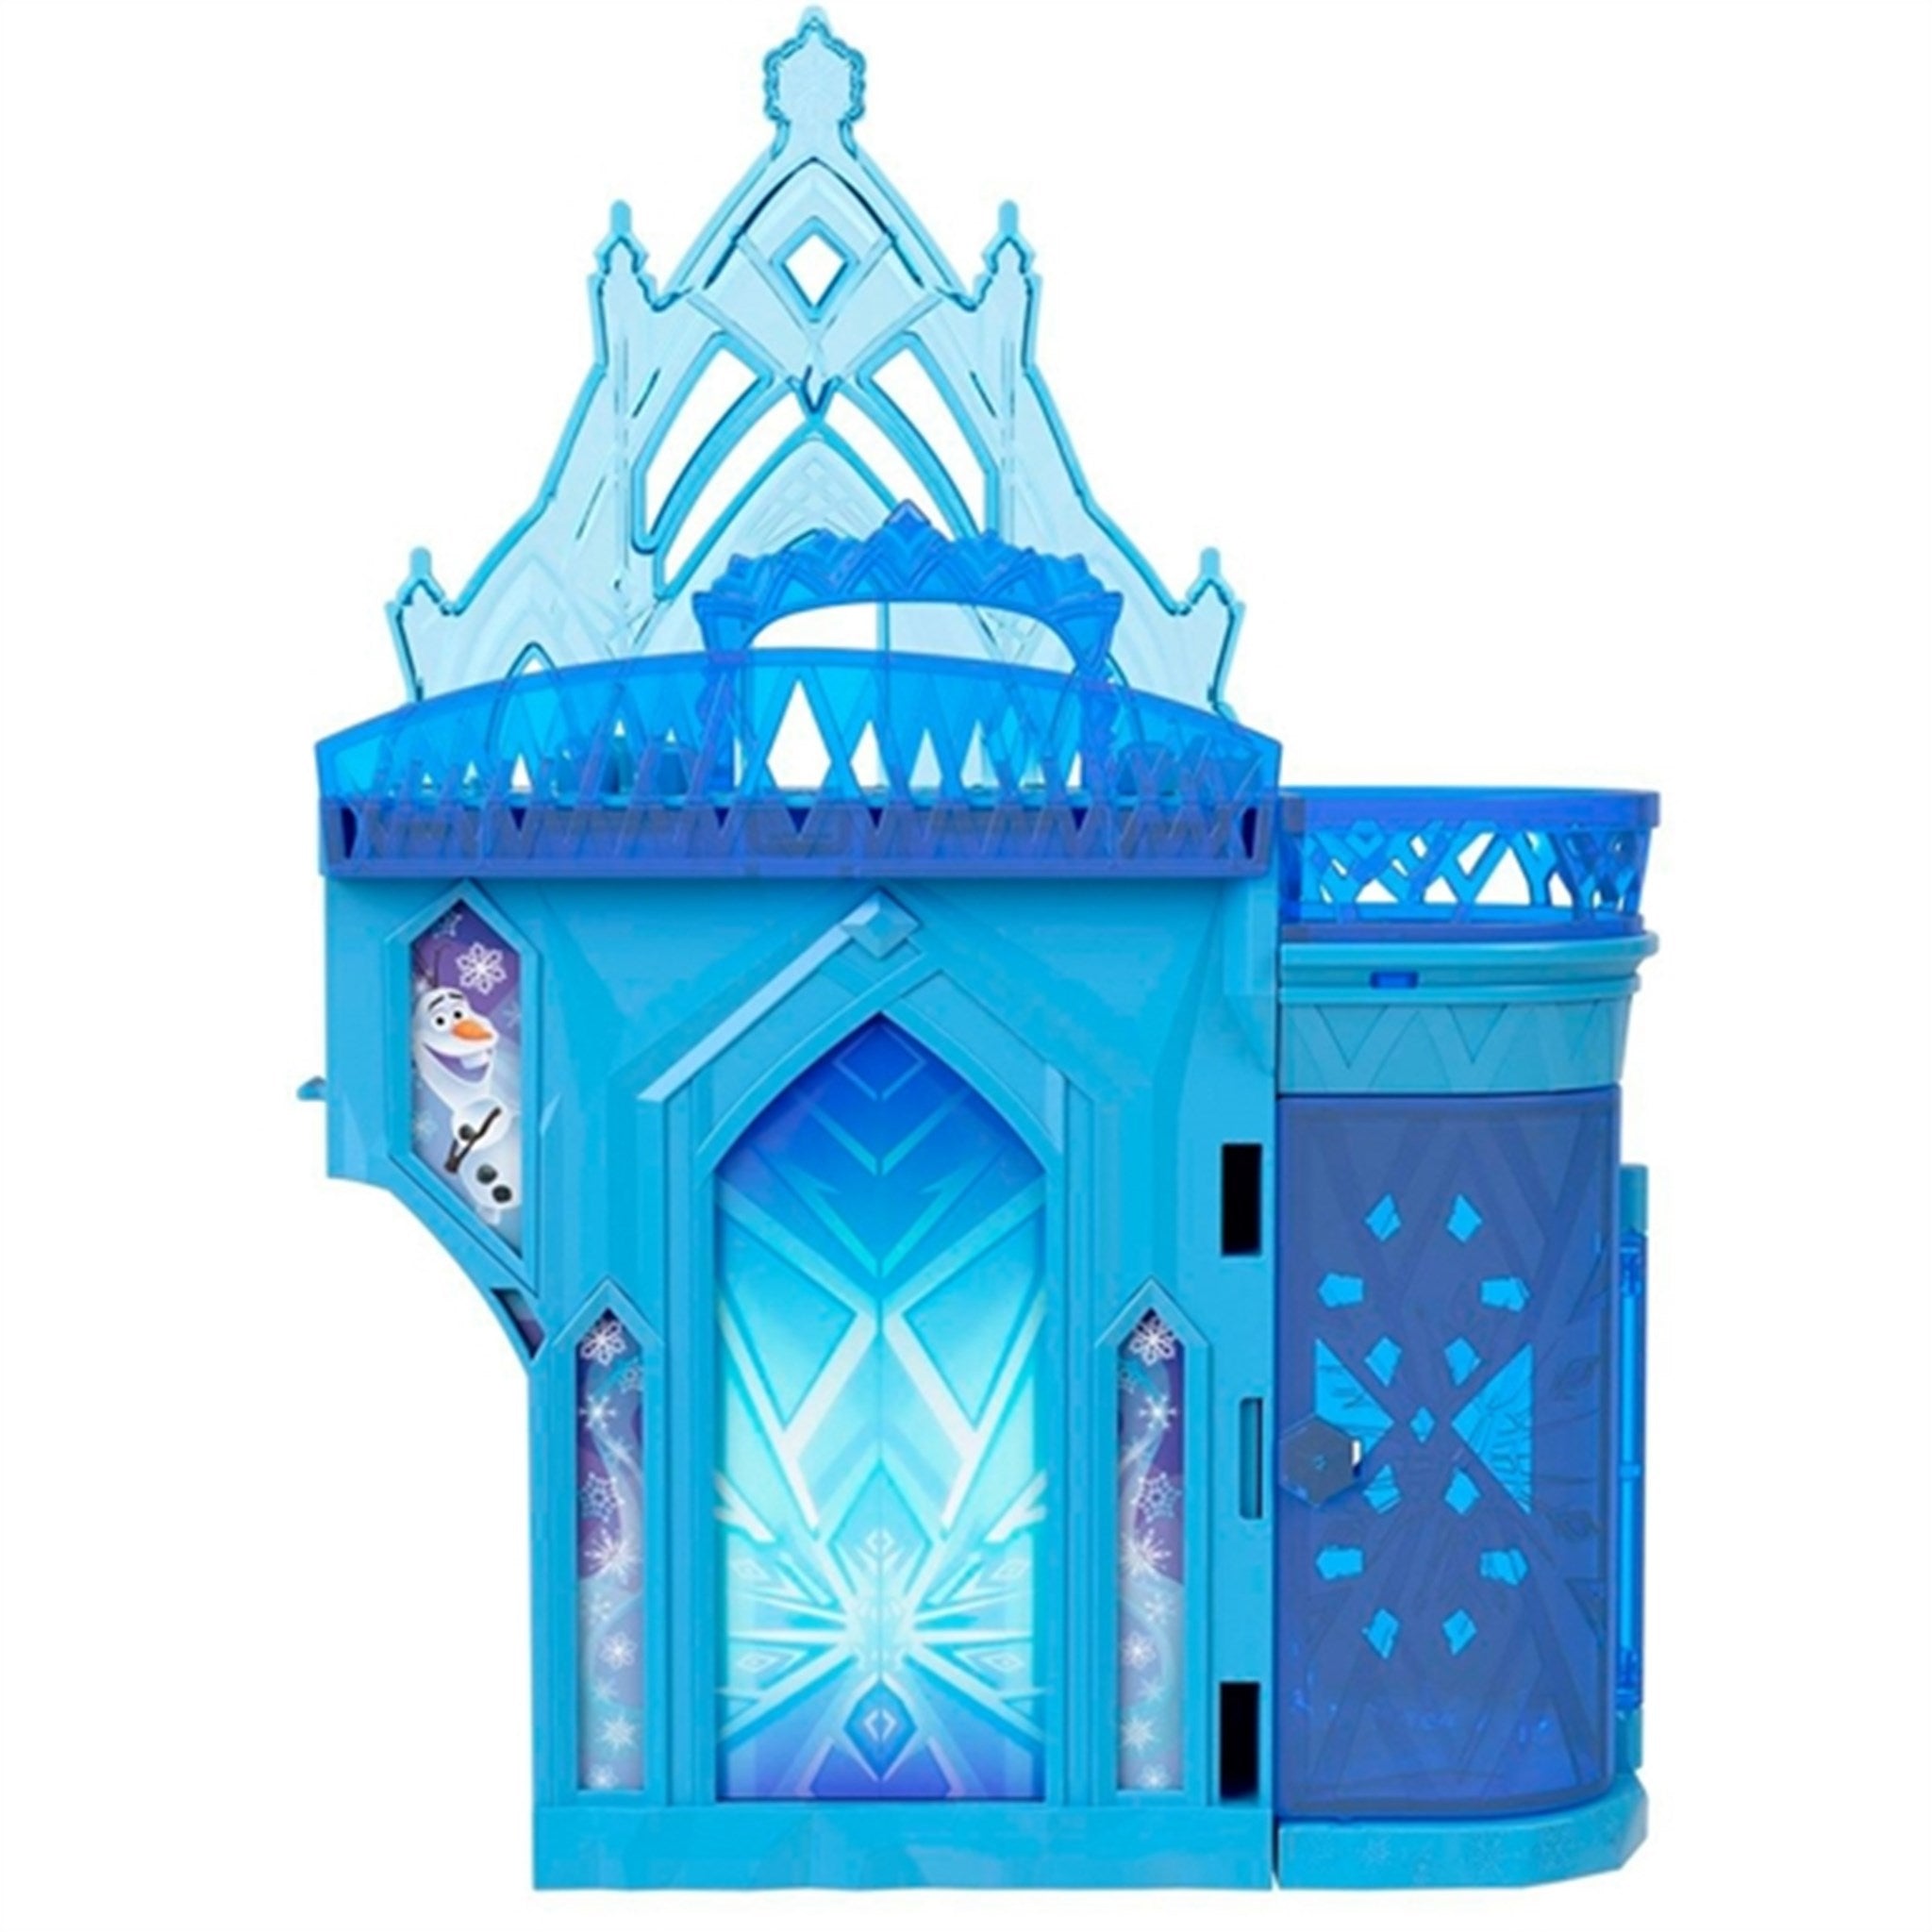 Disney Frozen Elsa's Ice Castle Playset 7